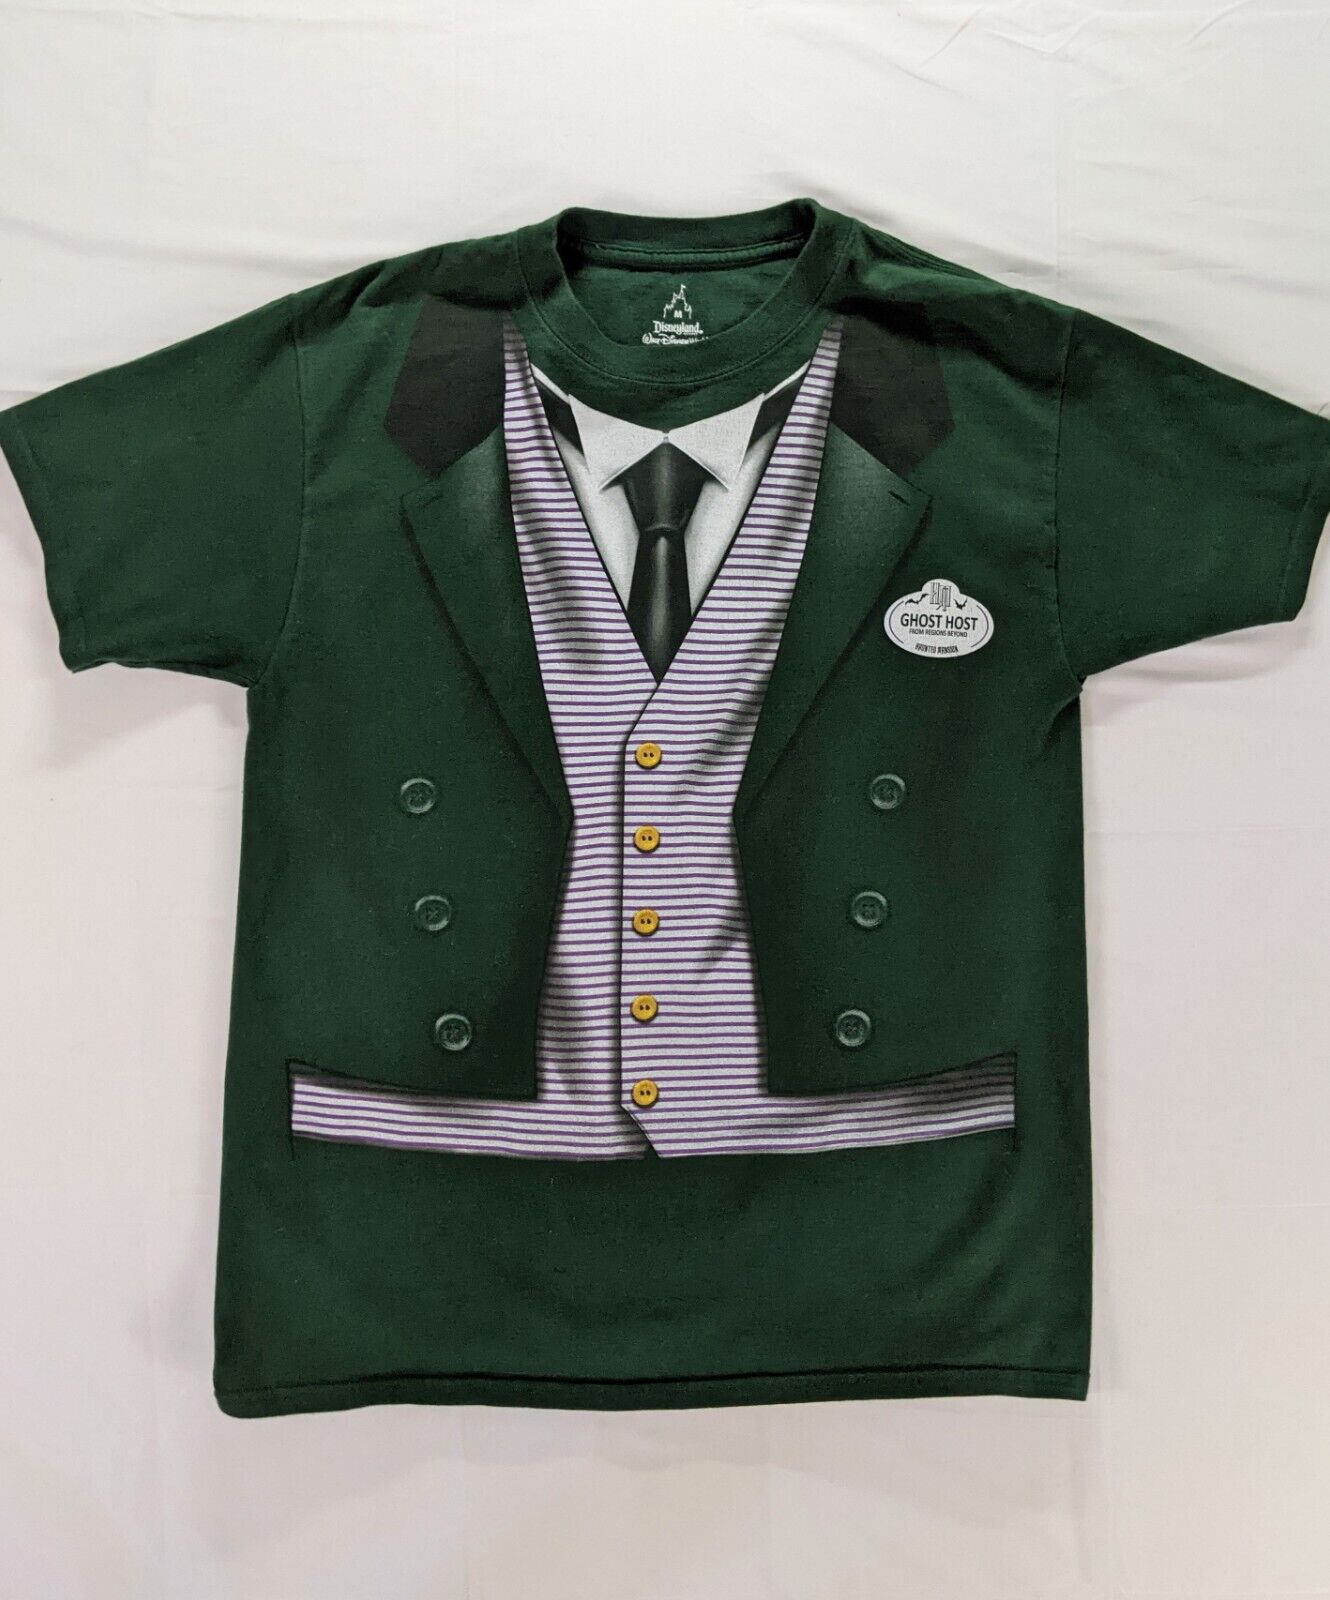 Disneyland Resort Haunted Mansion Ghost Host Uniform T-Shirt Adult M Green